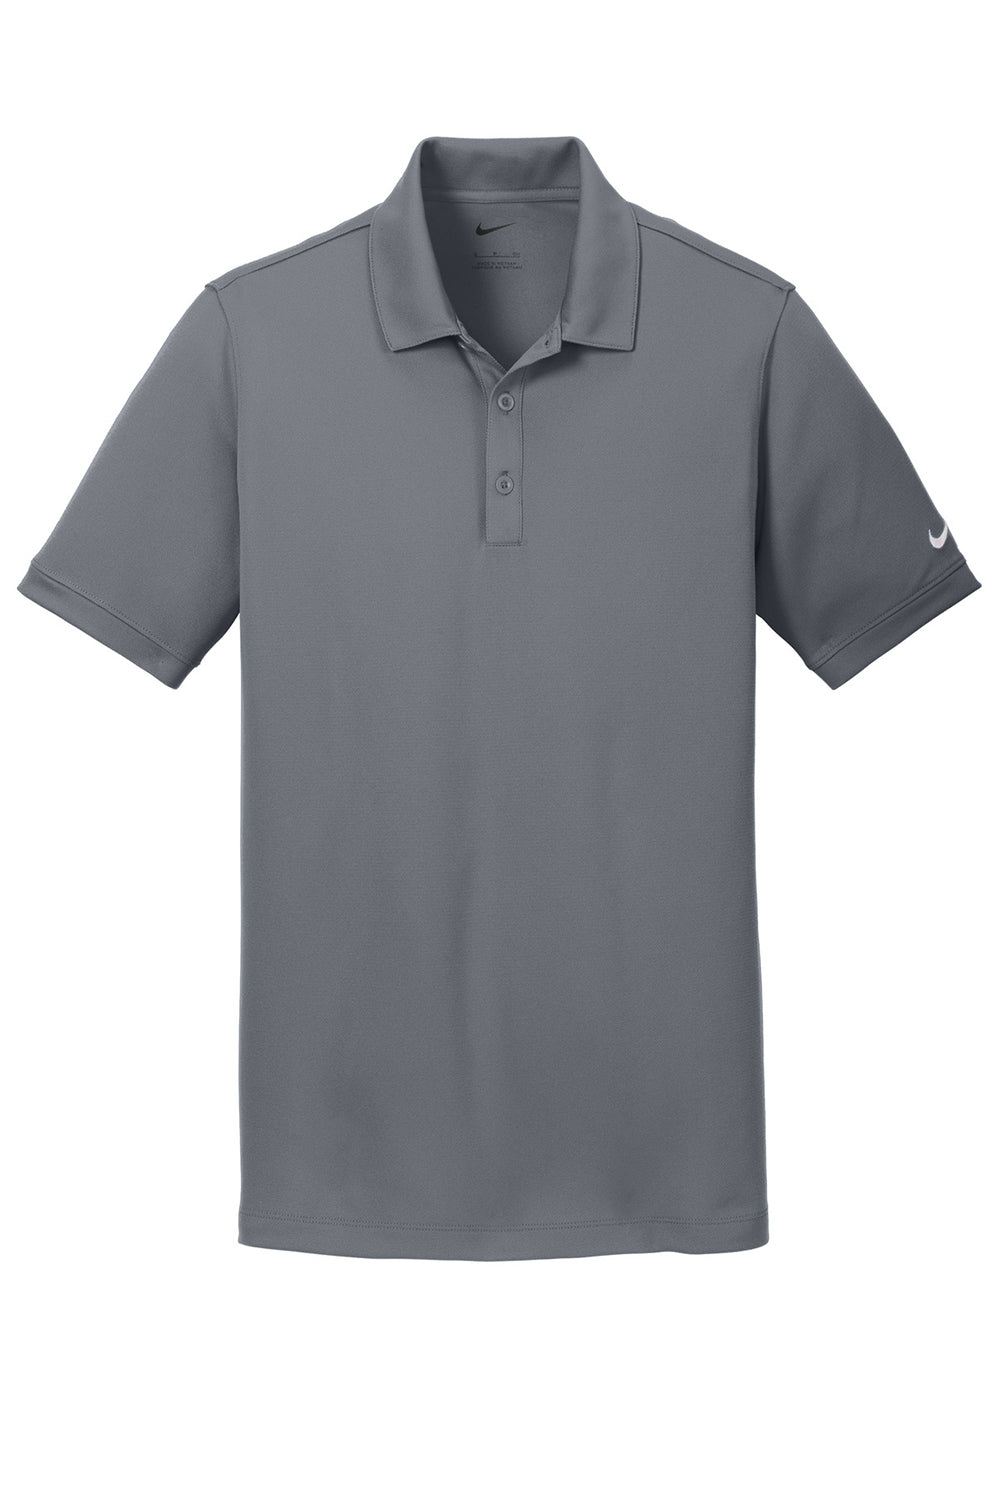 Nike 746099 Mens Icon Dri-Fit Moisture Wicking Short Sleeve Polo Shirt Dark Grey Flat Front